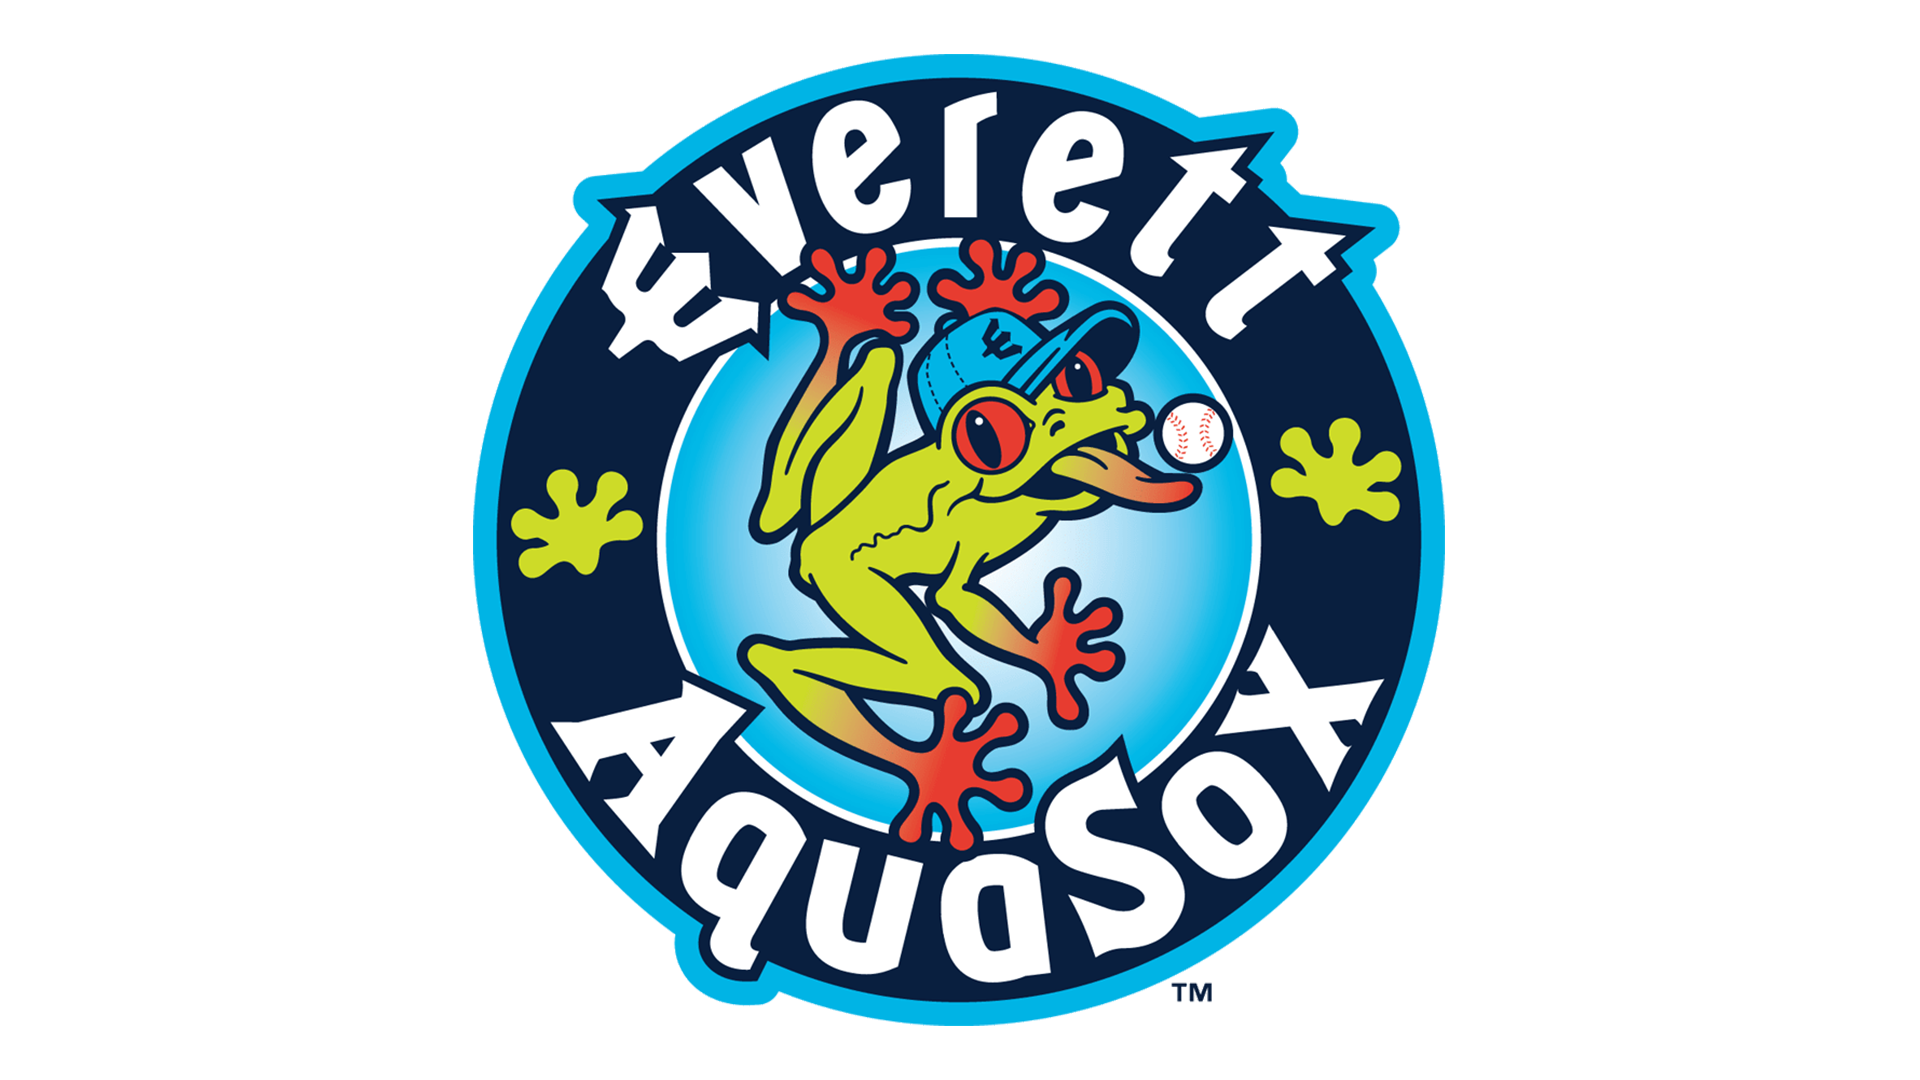 Everett AquaSox | Organizational Profile, Work & Jobs